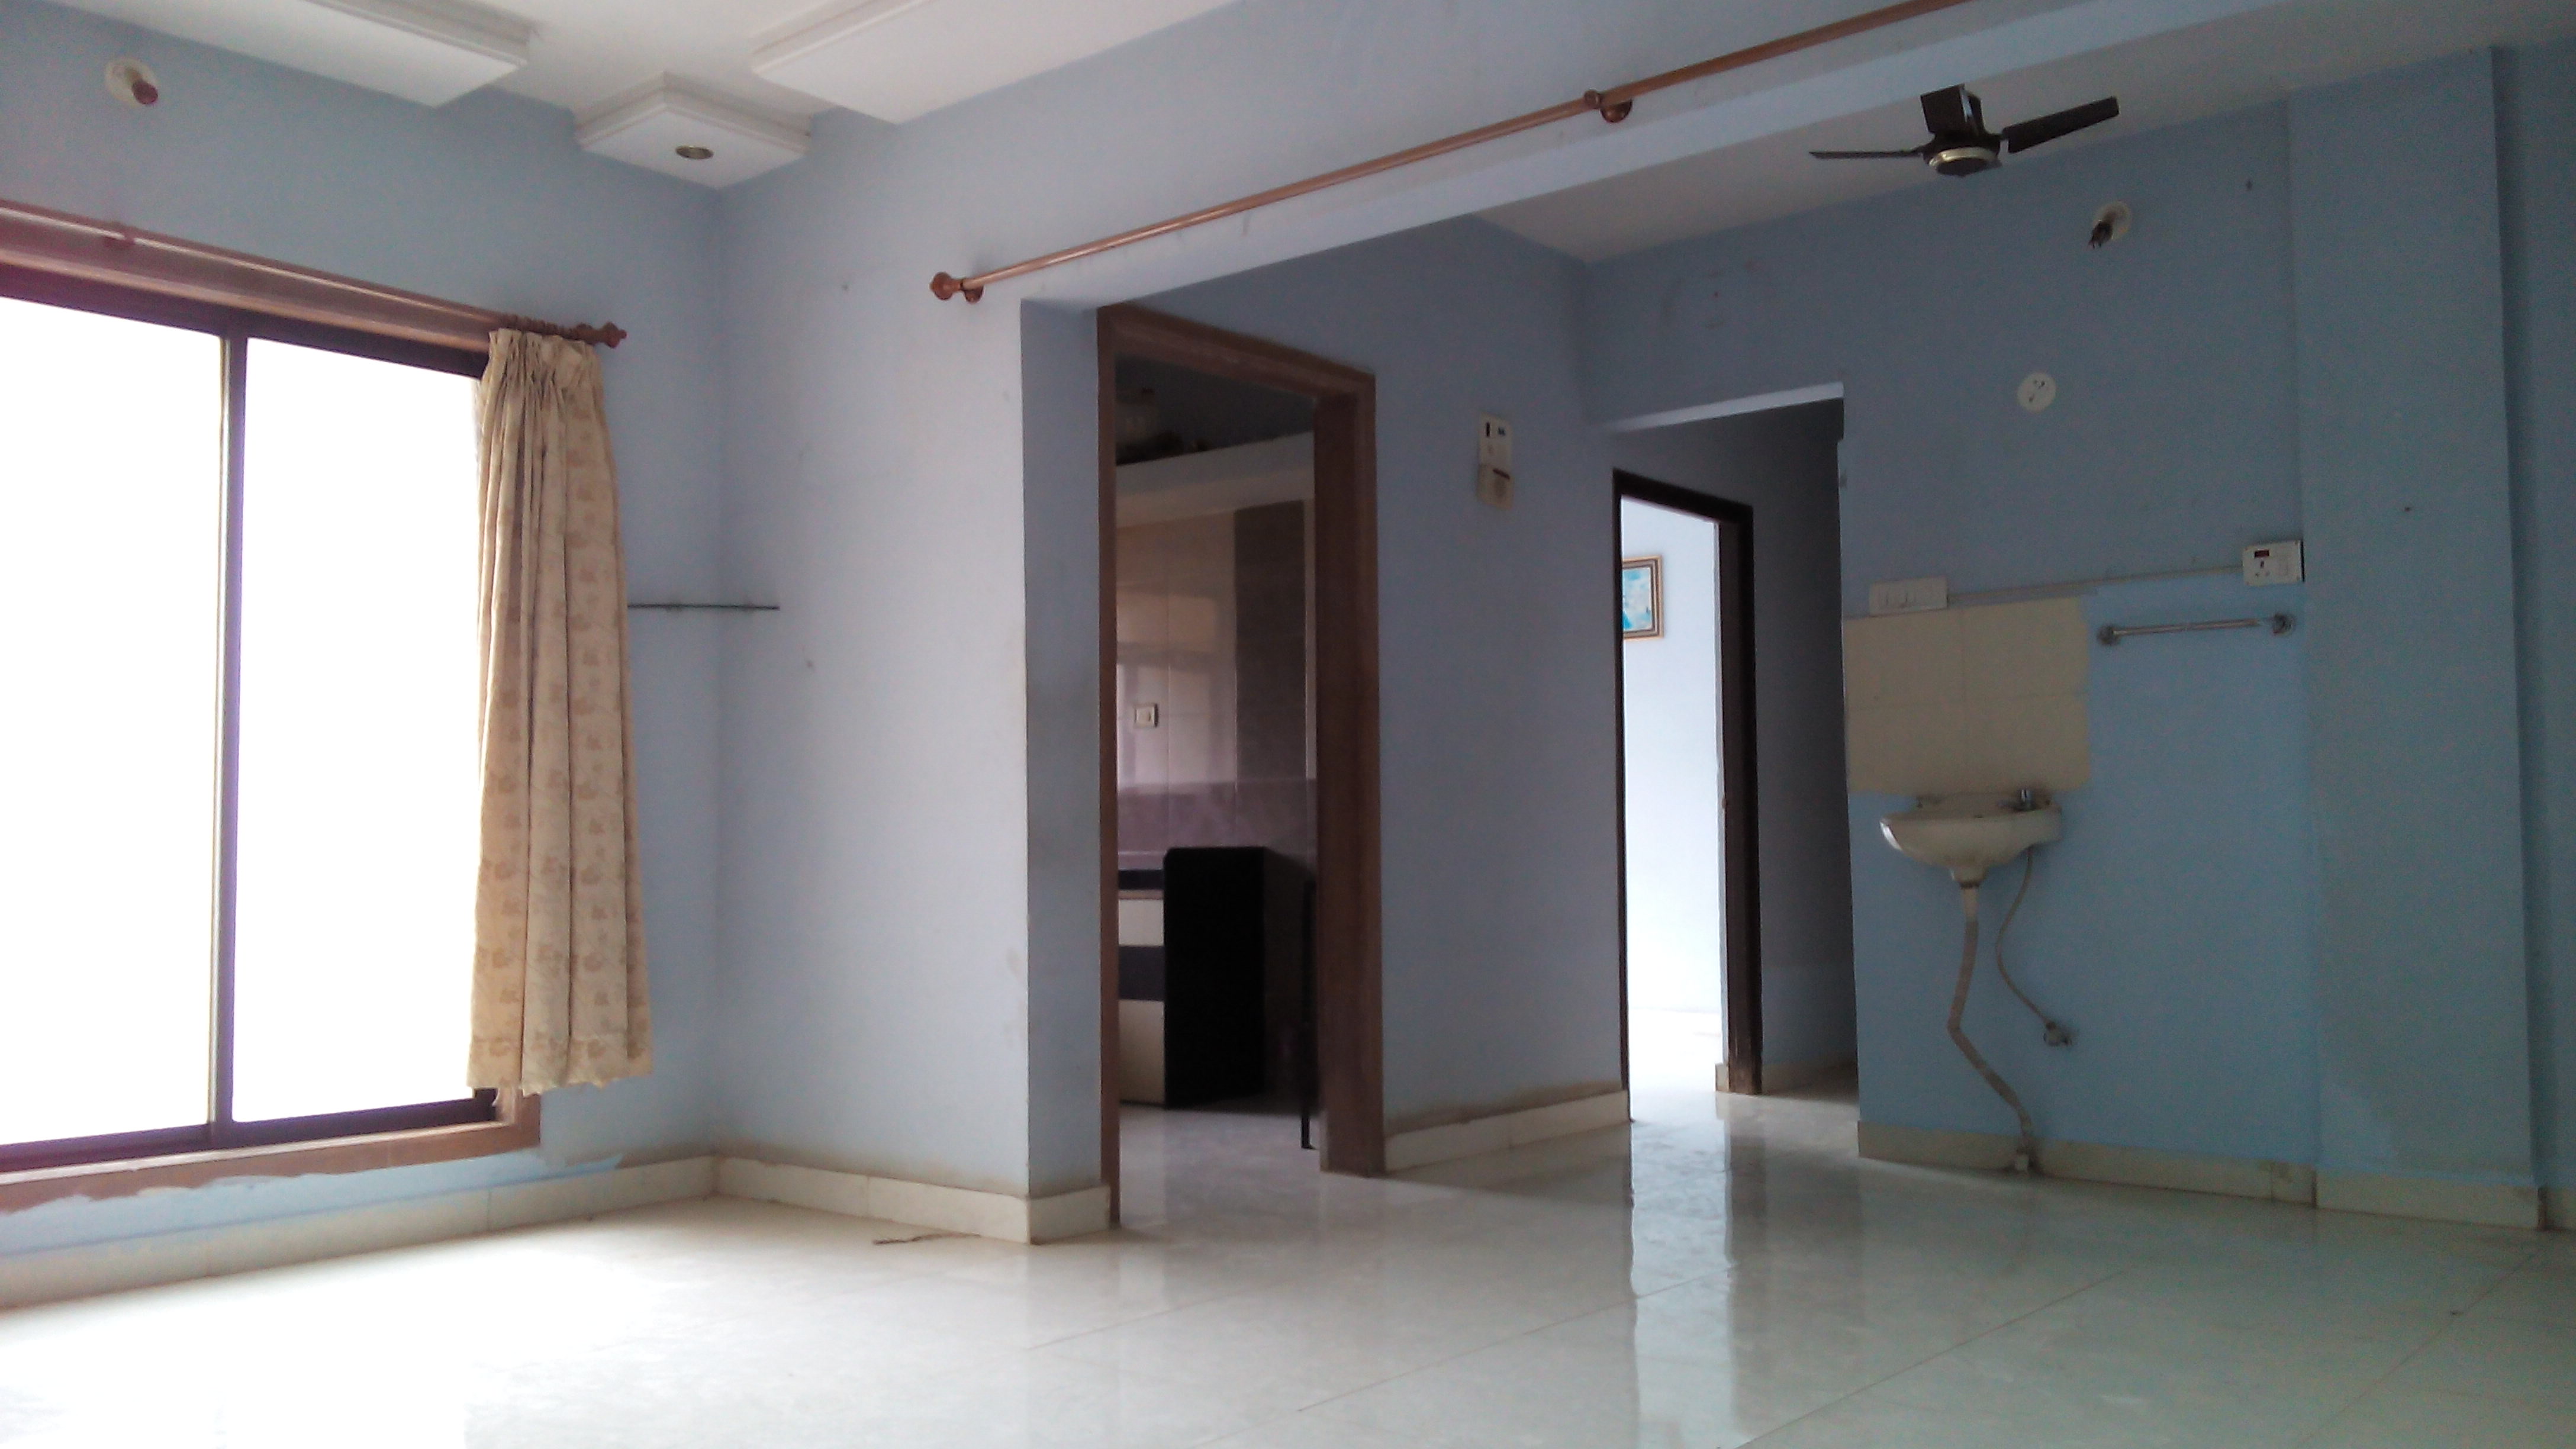 Residential Multistorey Apartment for Sale in Classic Apt.Sai Nath Nagar Virar East. , Mumbai Central-West, Mumbai